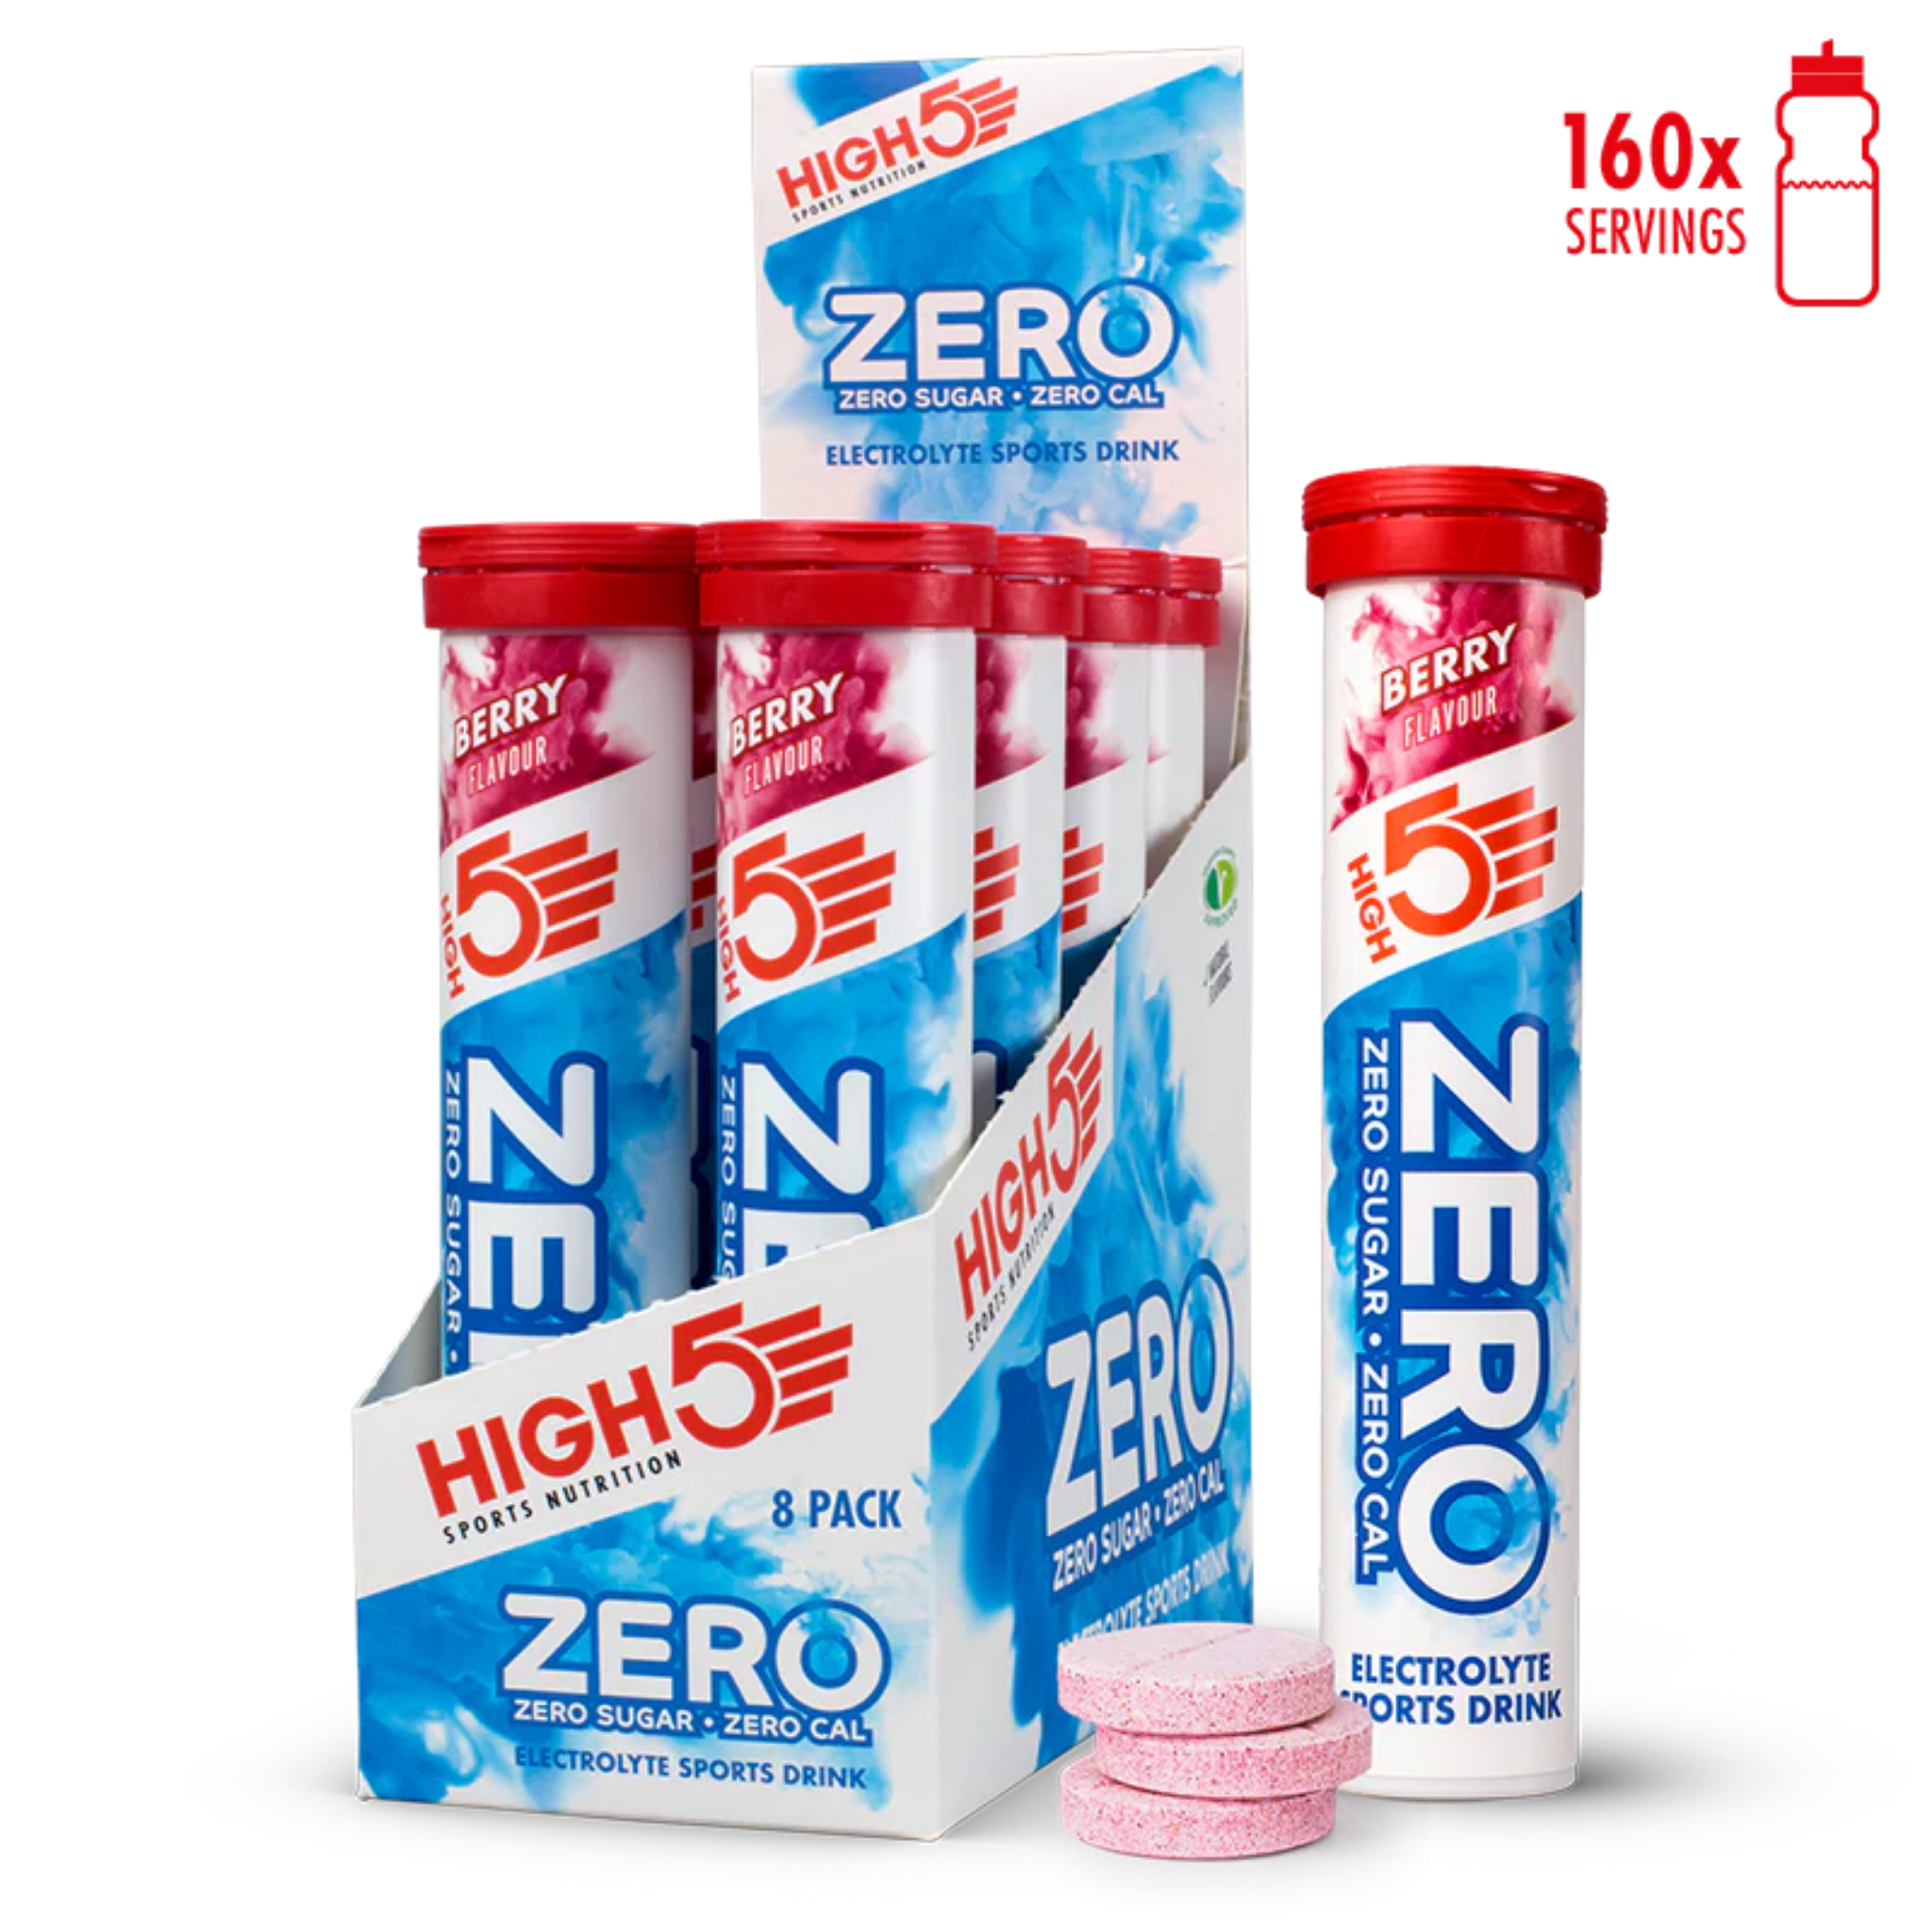 High5 Elektrolyttabs ZERO Berry (20 tabs)